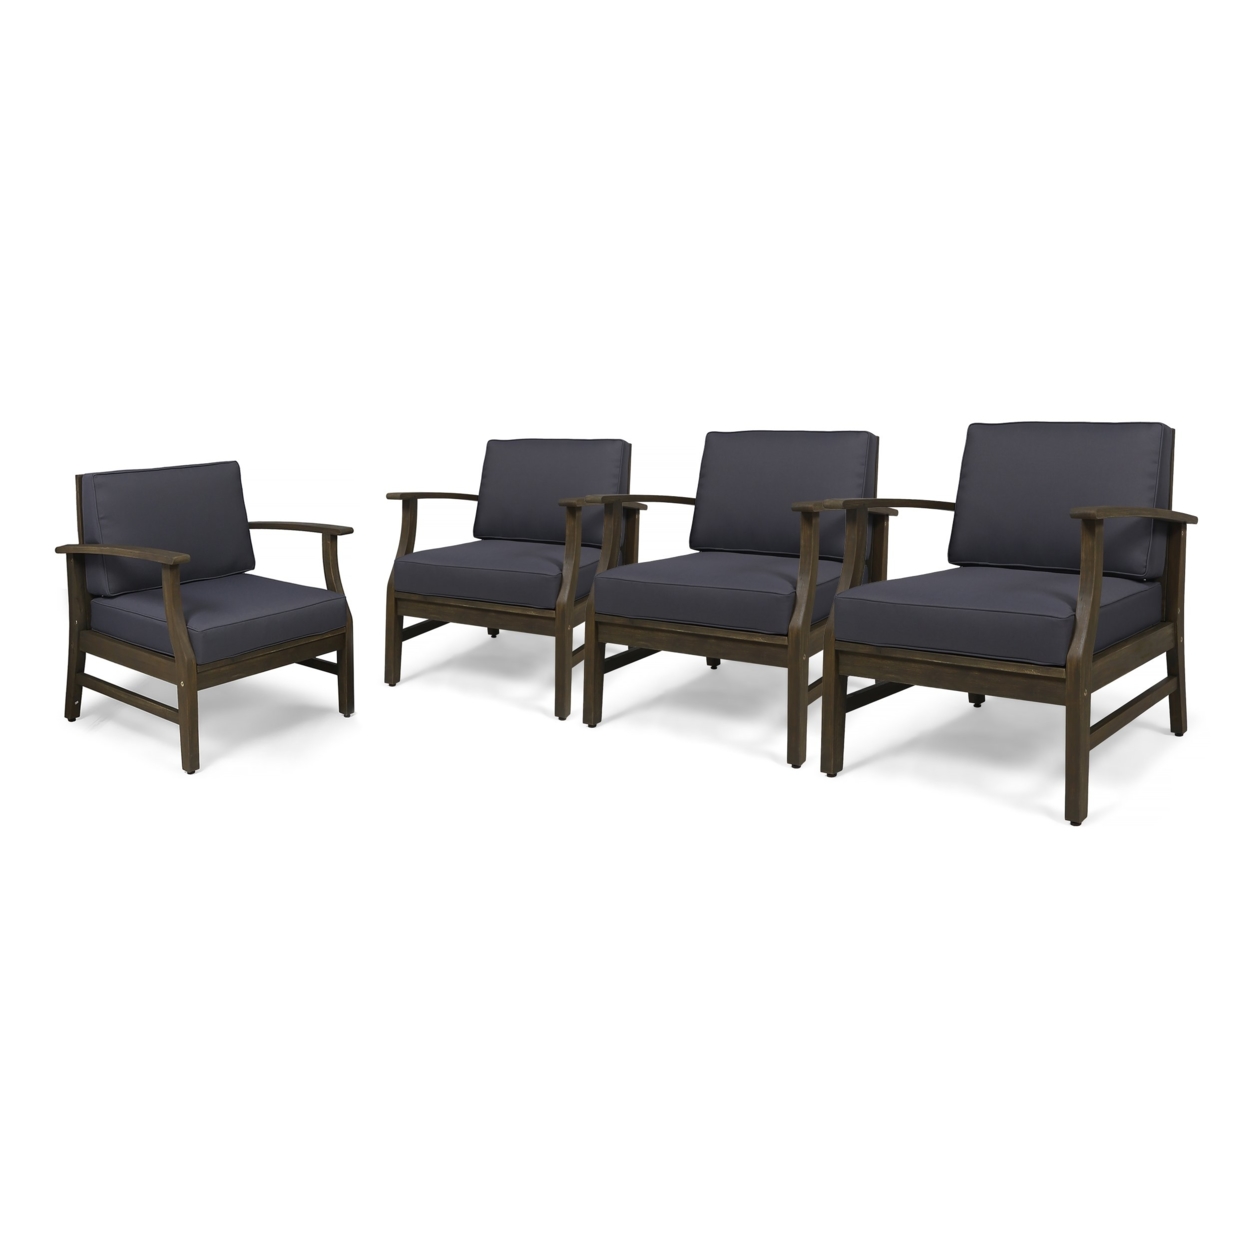 Simona Outdoor Acacia Wood Club Chairs With Cushions - Gray / Dark Gray, Set Of 2